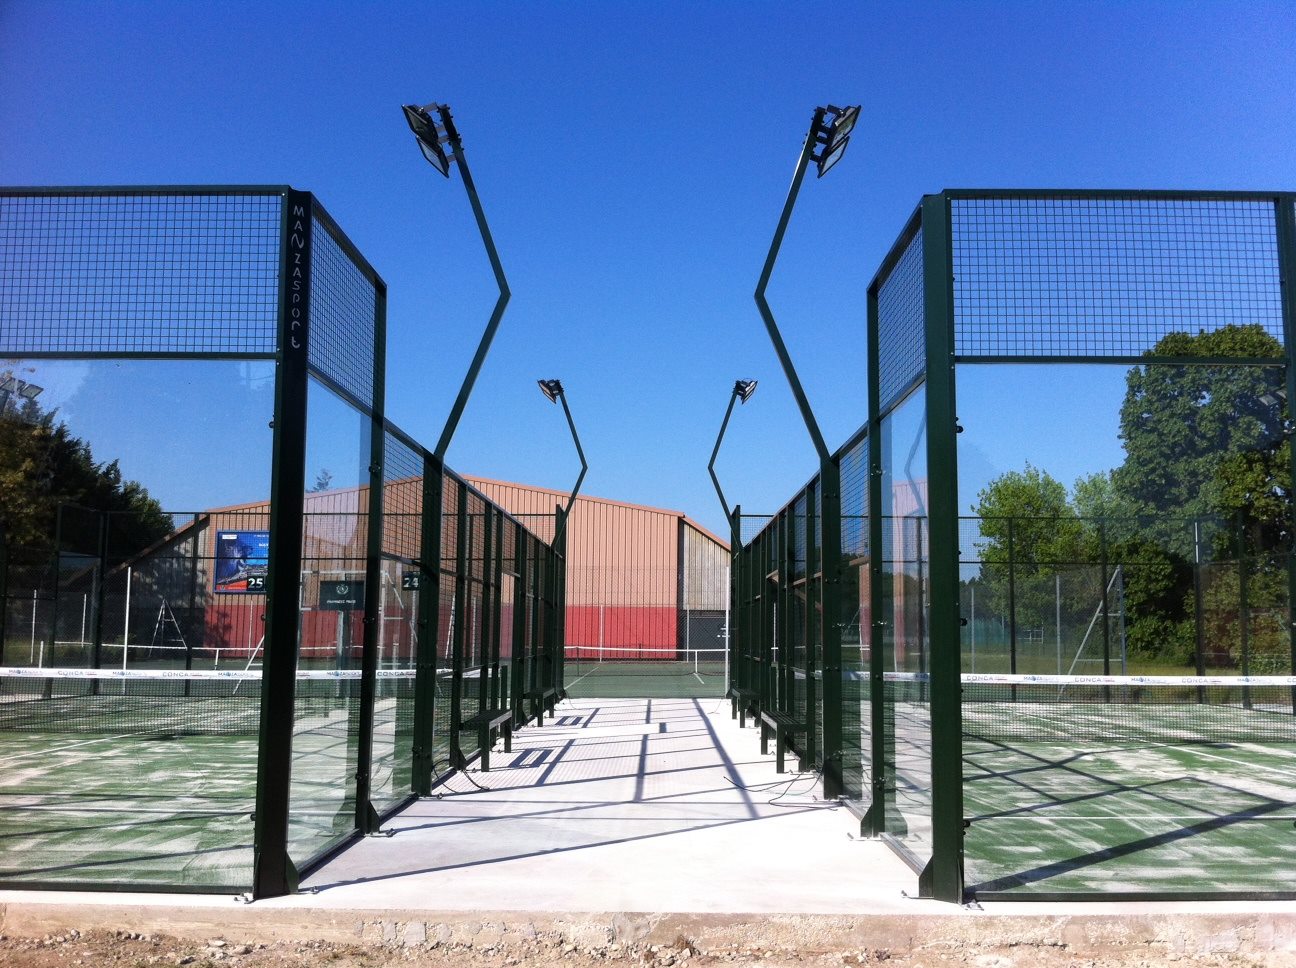 Der Tennis Club de Lyon bietet 2-Paddle-Plätze